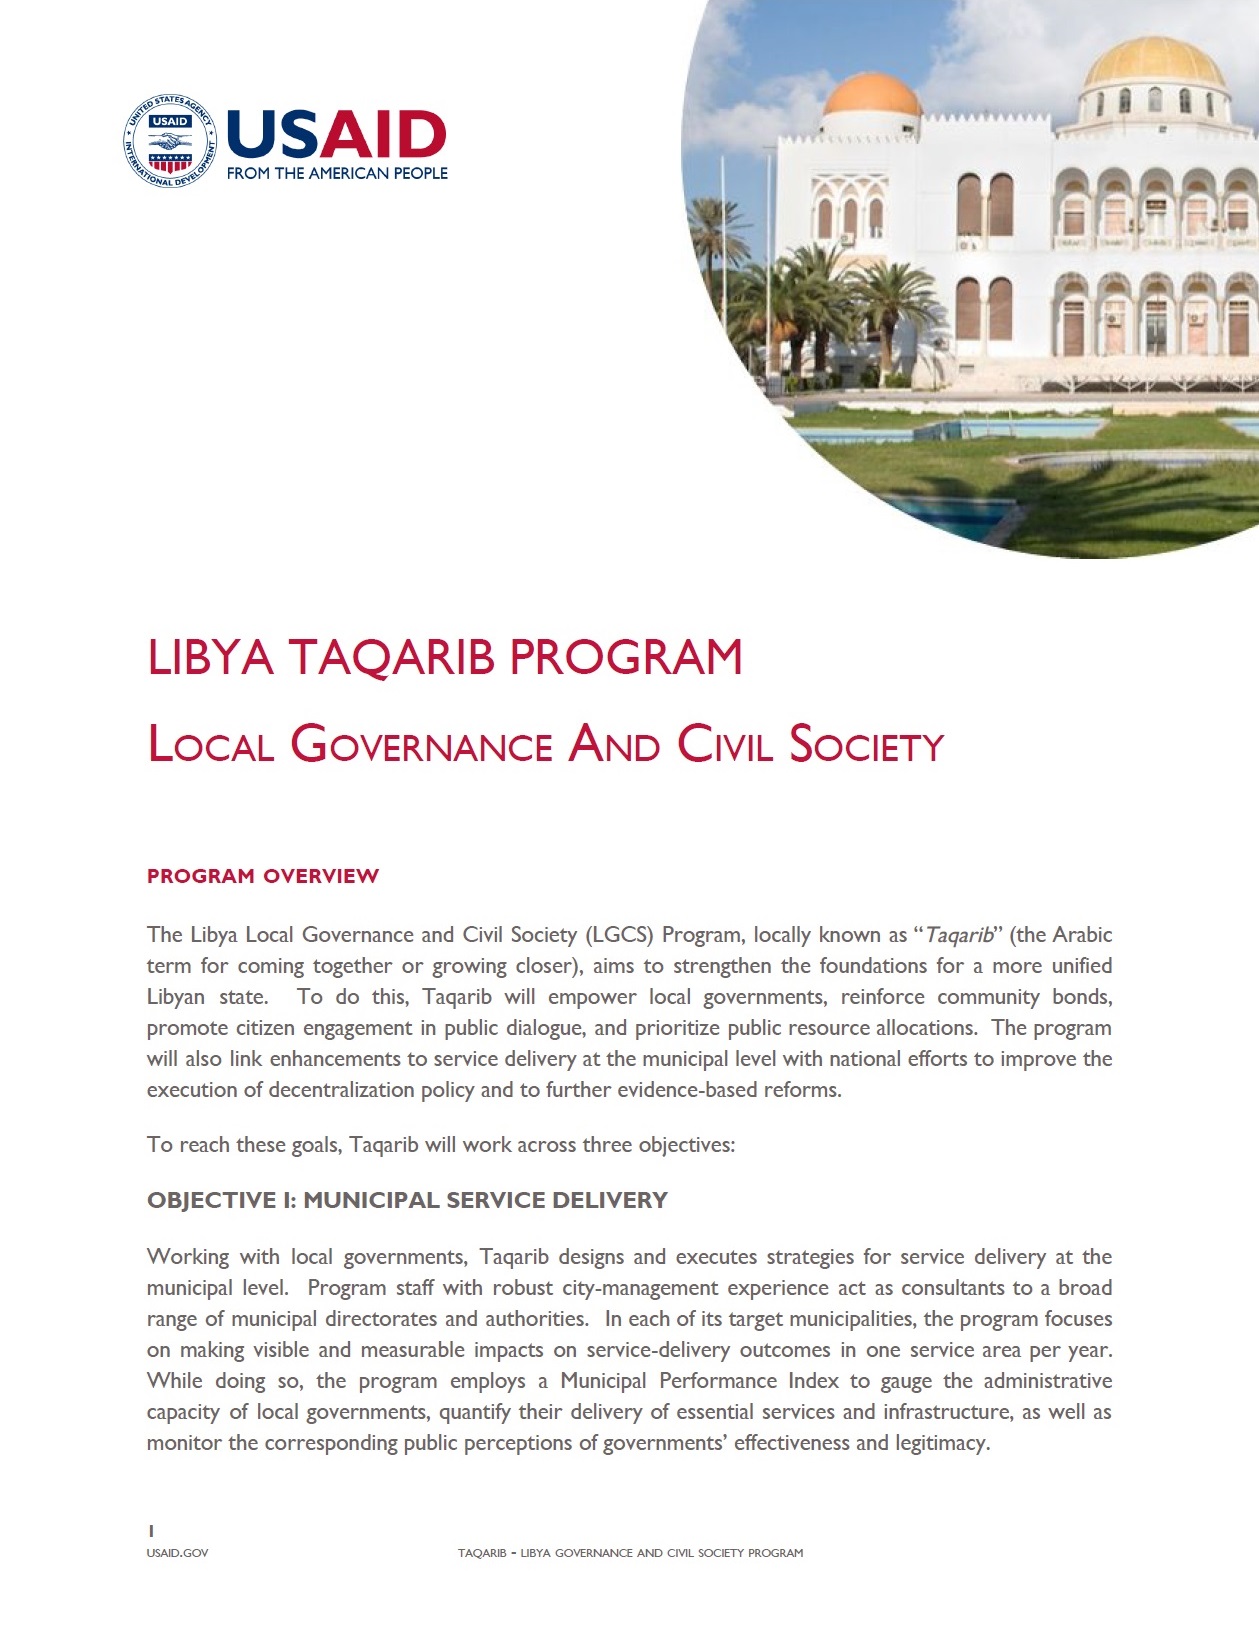 Libya Governance and Civil Society Program (LGCS) Factsheet